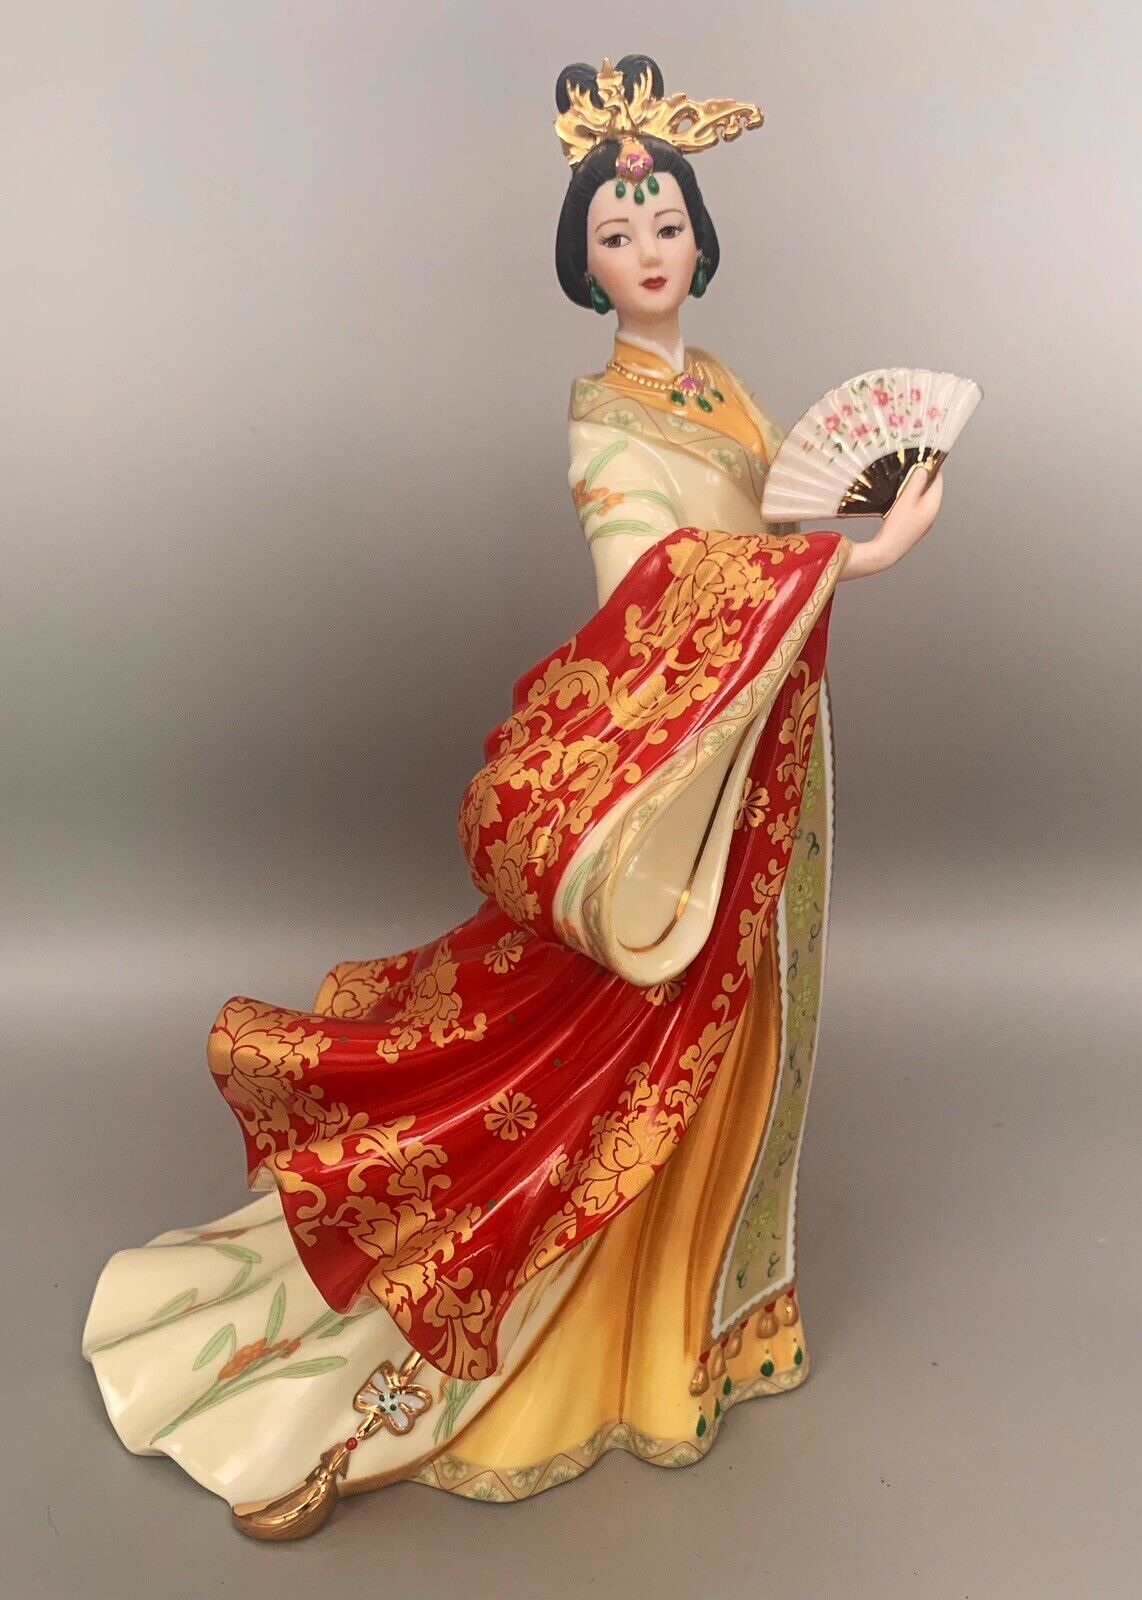 Danbury Mint Jade Empress figurine by Lena Liu Hand painted 23k Gold Details EC